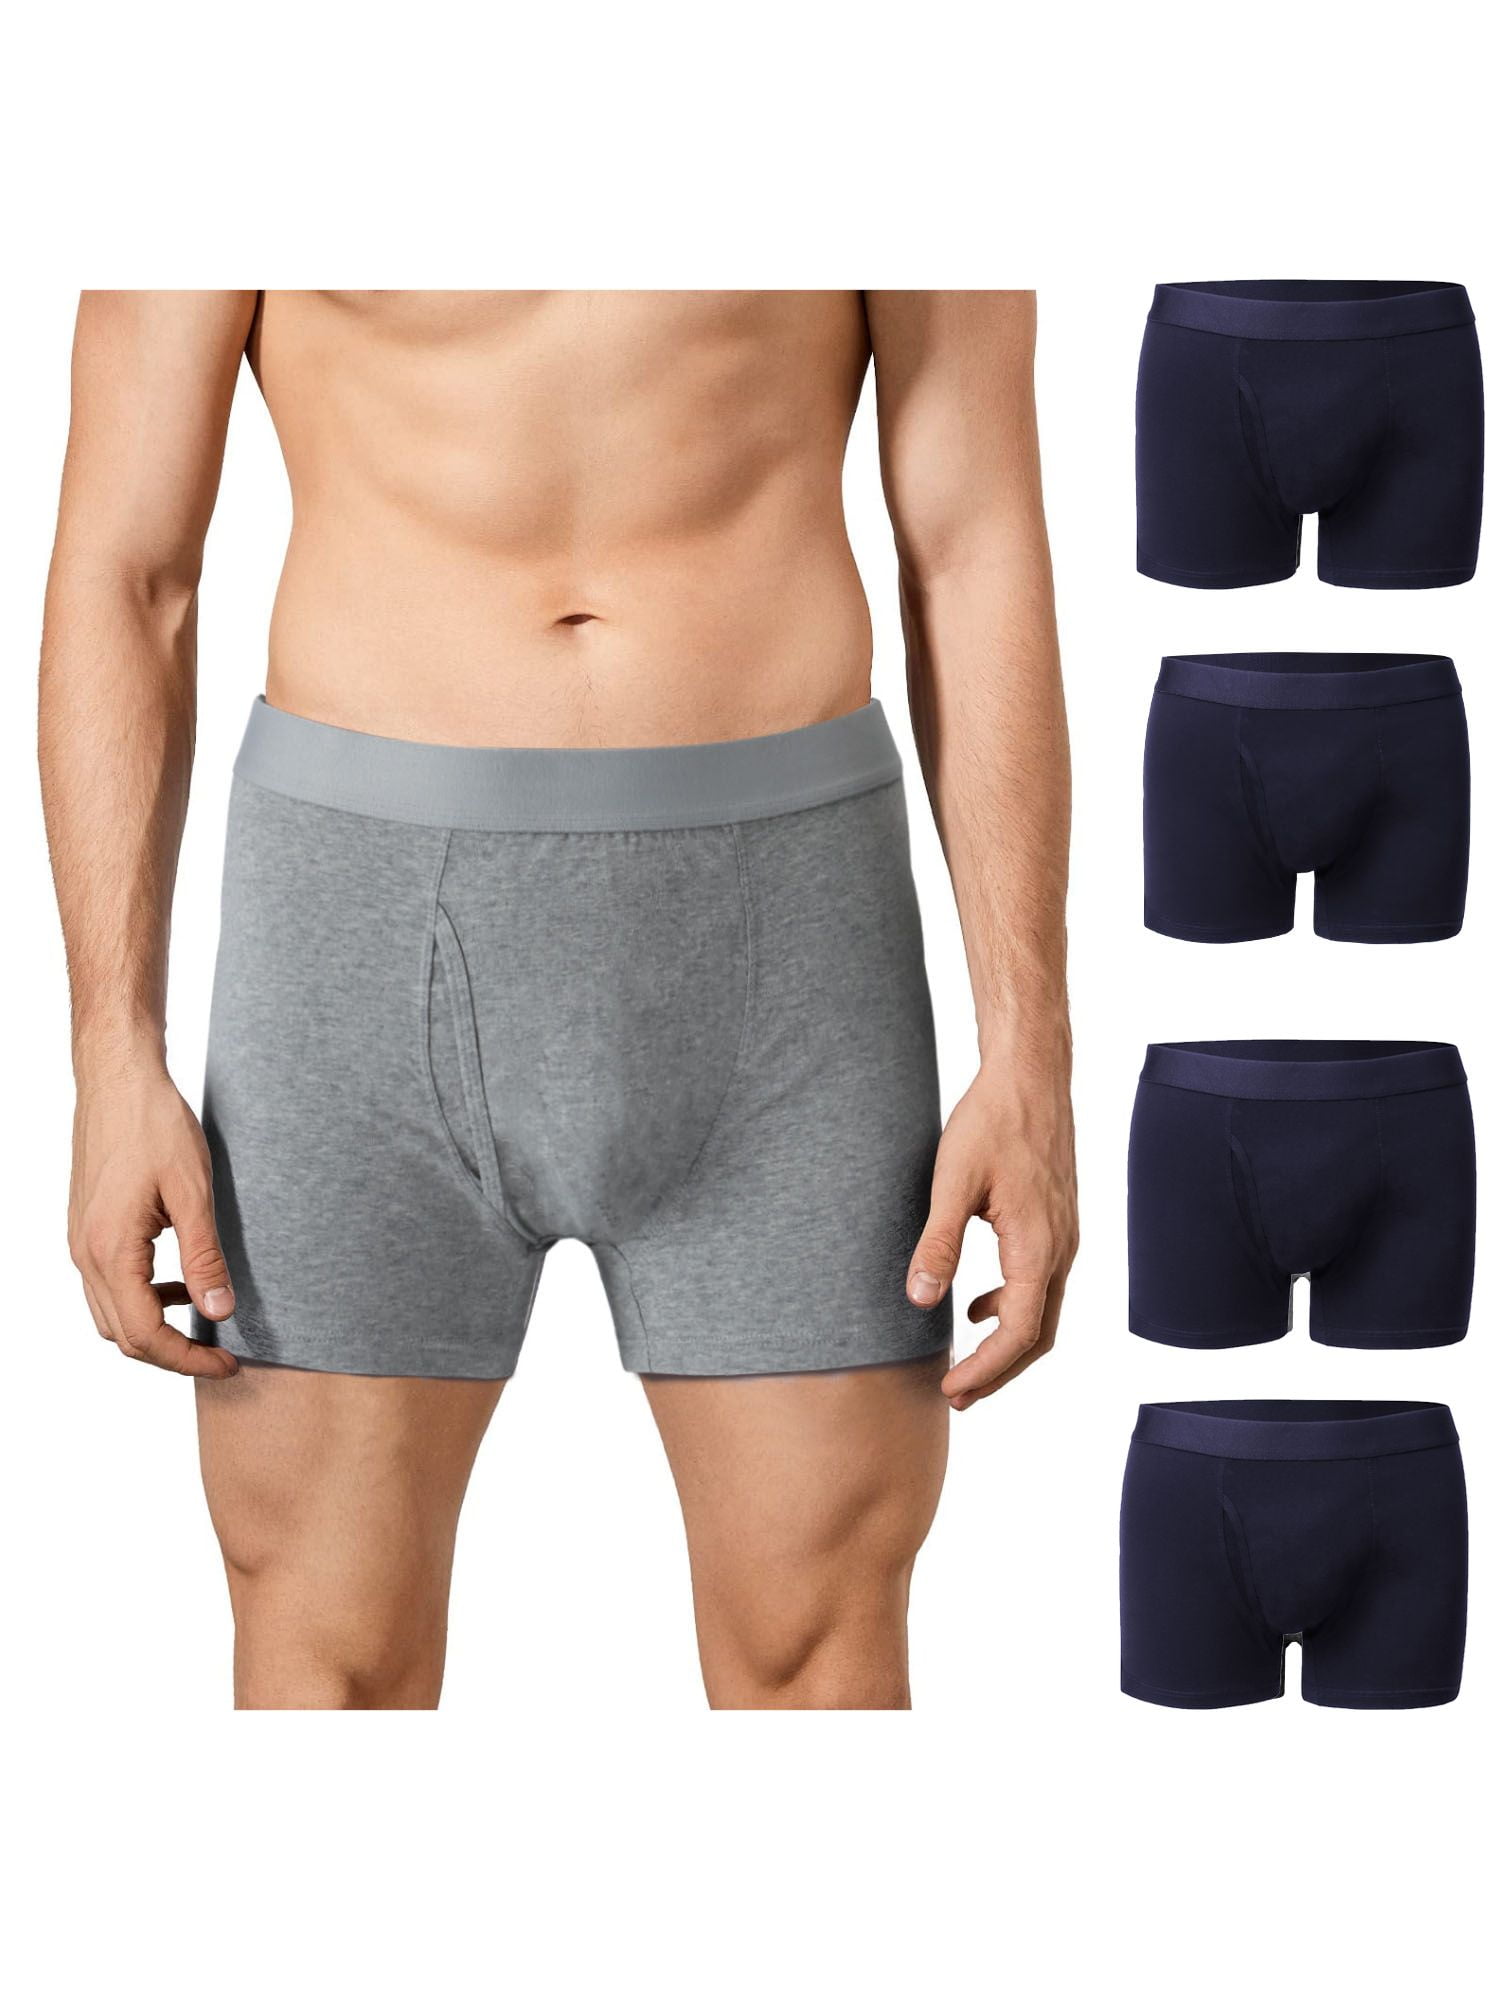 Luxtrada Men's Anti-Chafing Underwear Boxer Briefs with Pouch , 4